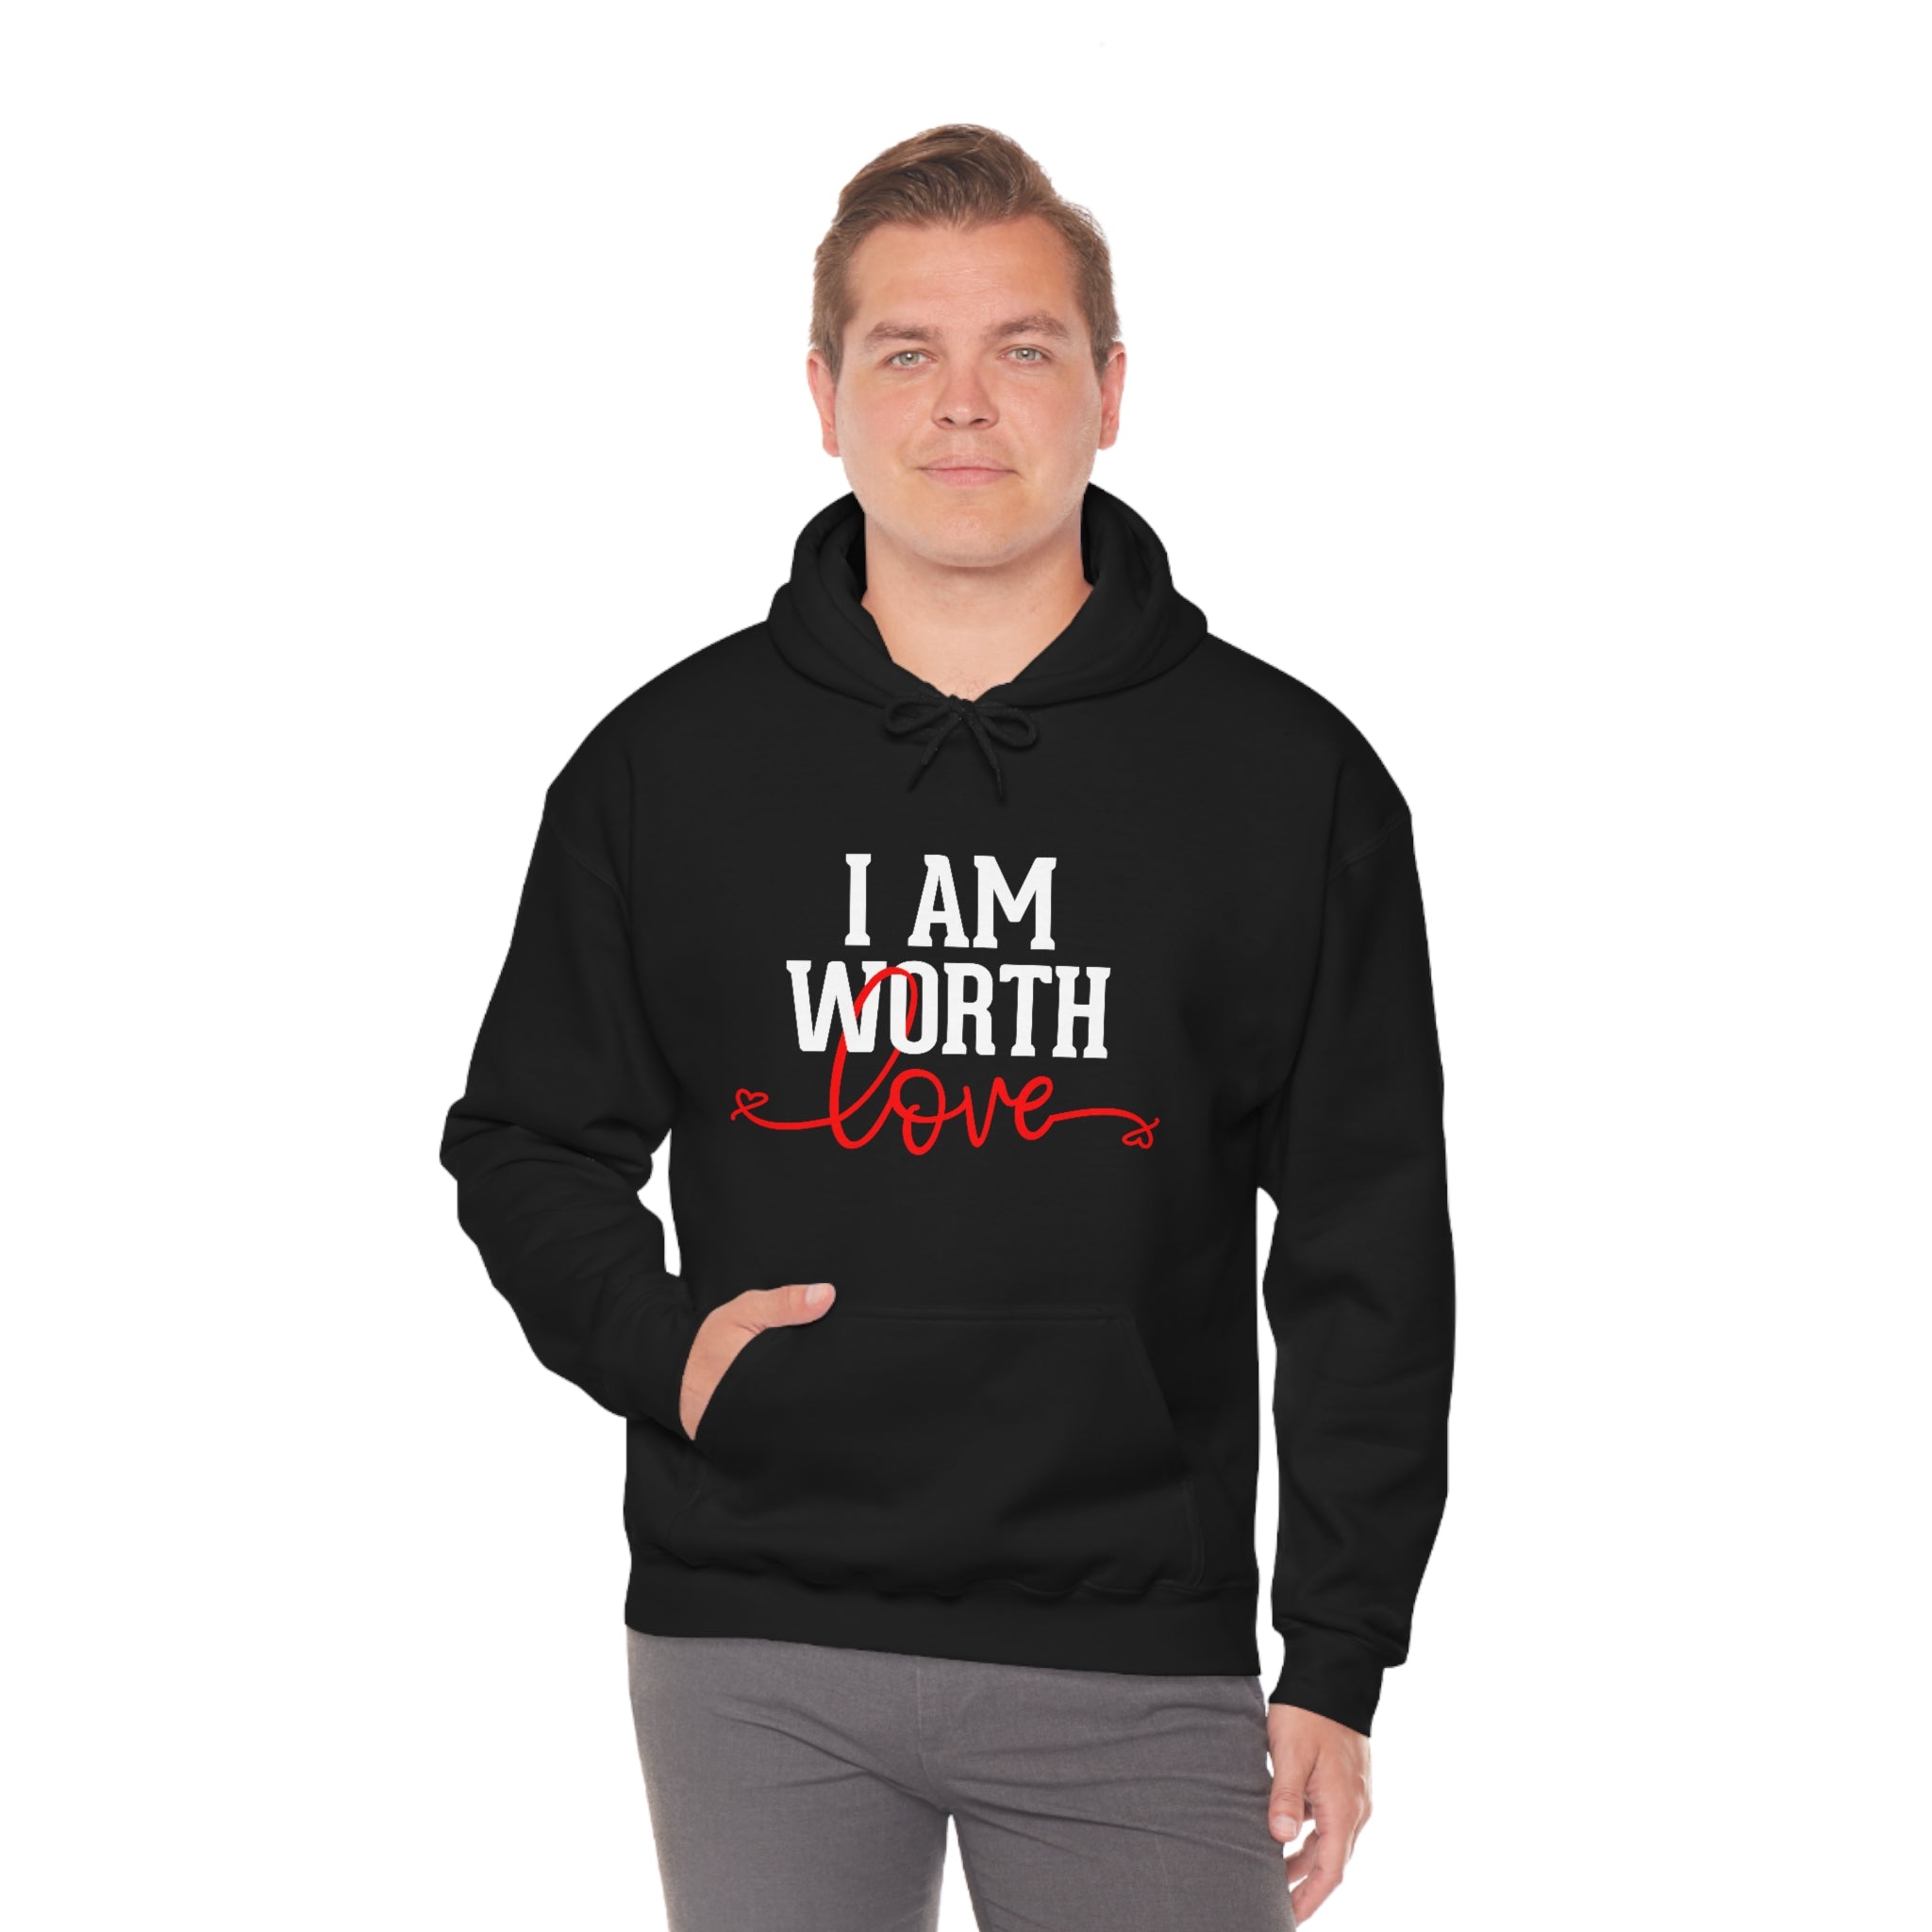 I AM Worth Love Hooded Sweatshirt